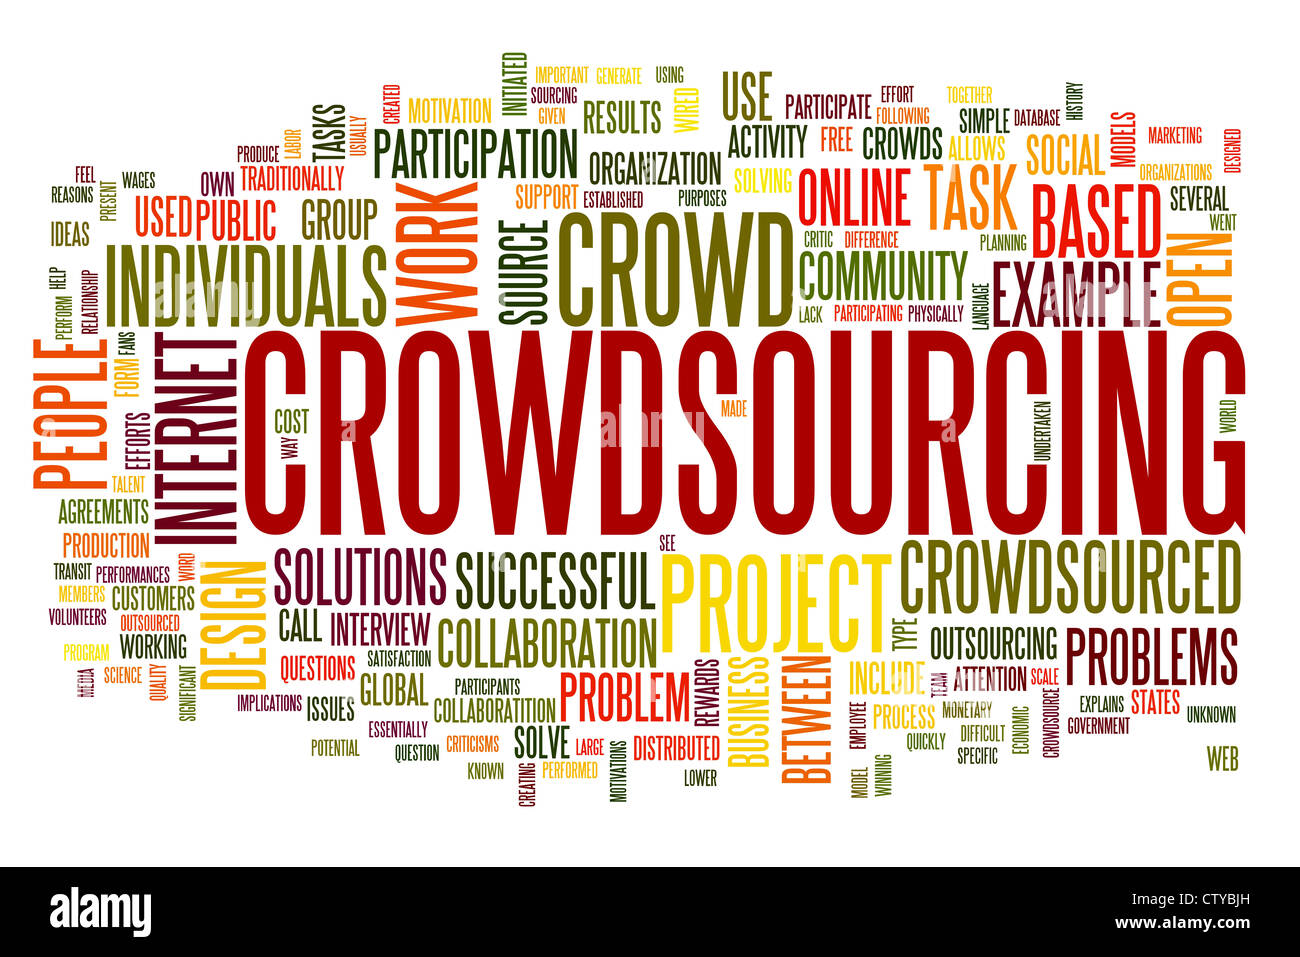 Crowdsourcing concetto in parola tag cloud isolati su sfondo bianco Foto Stock